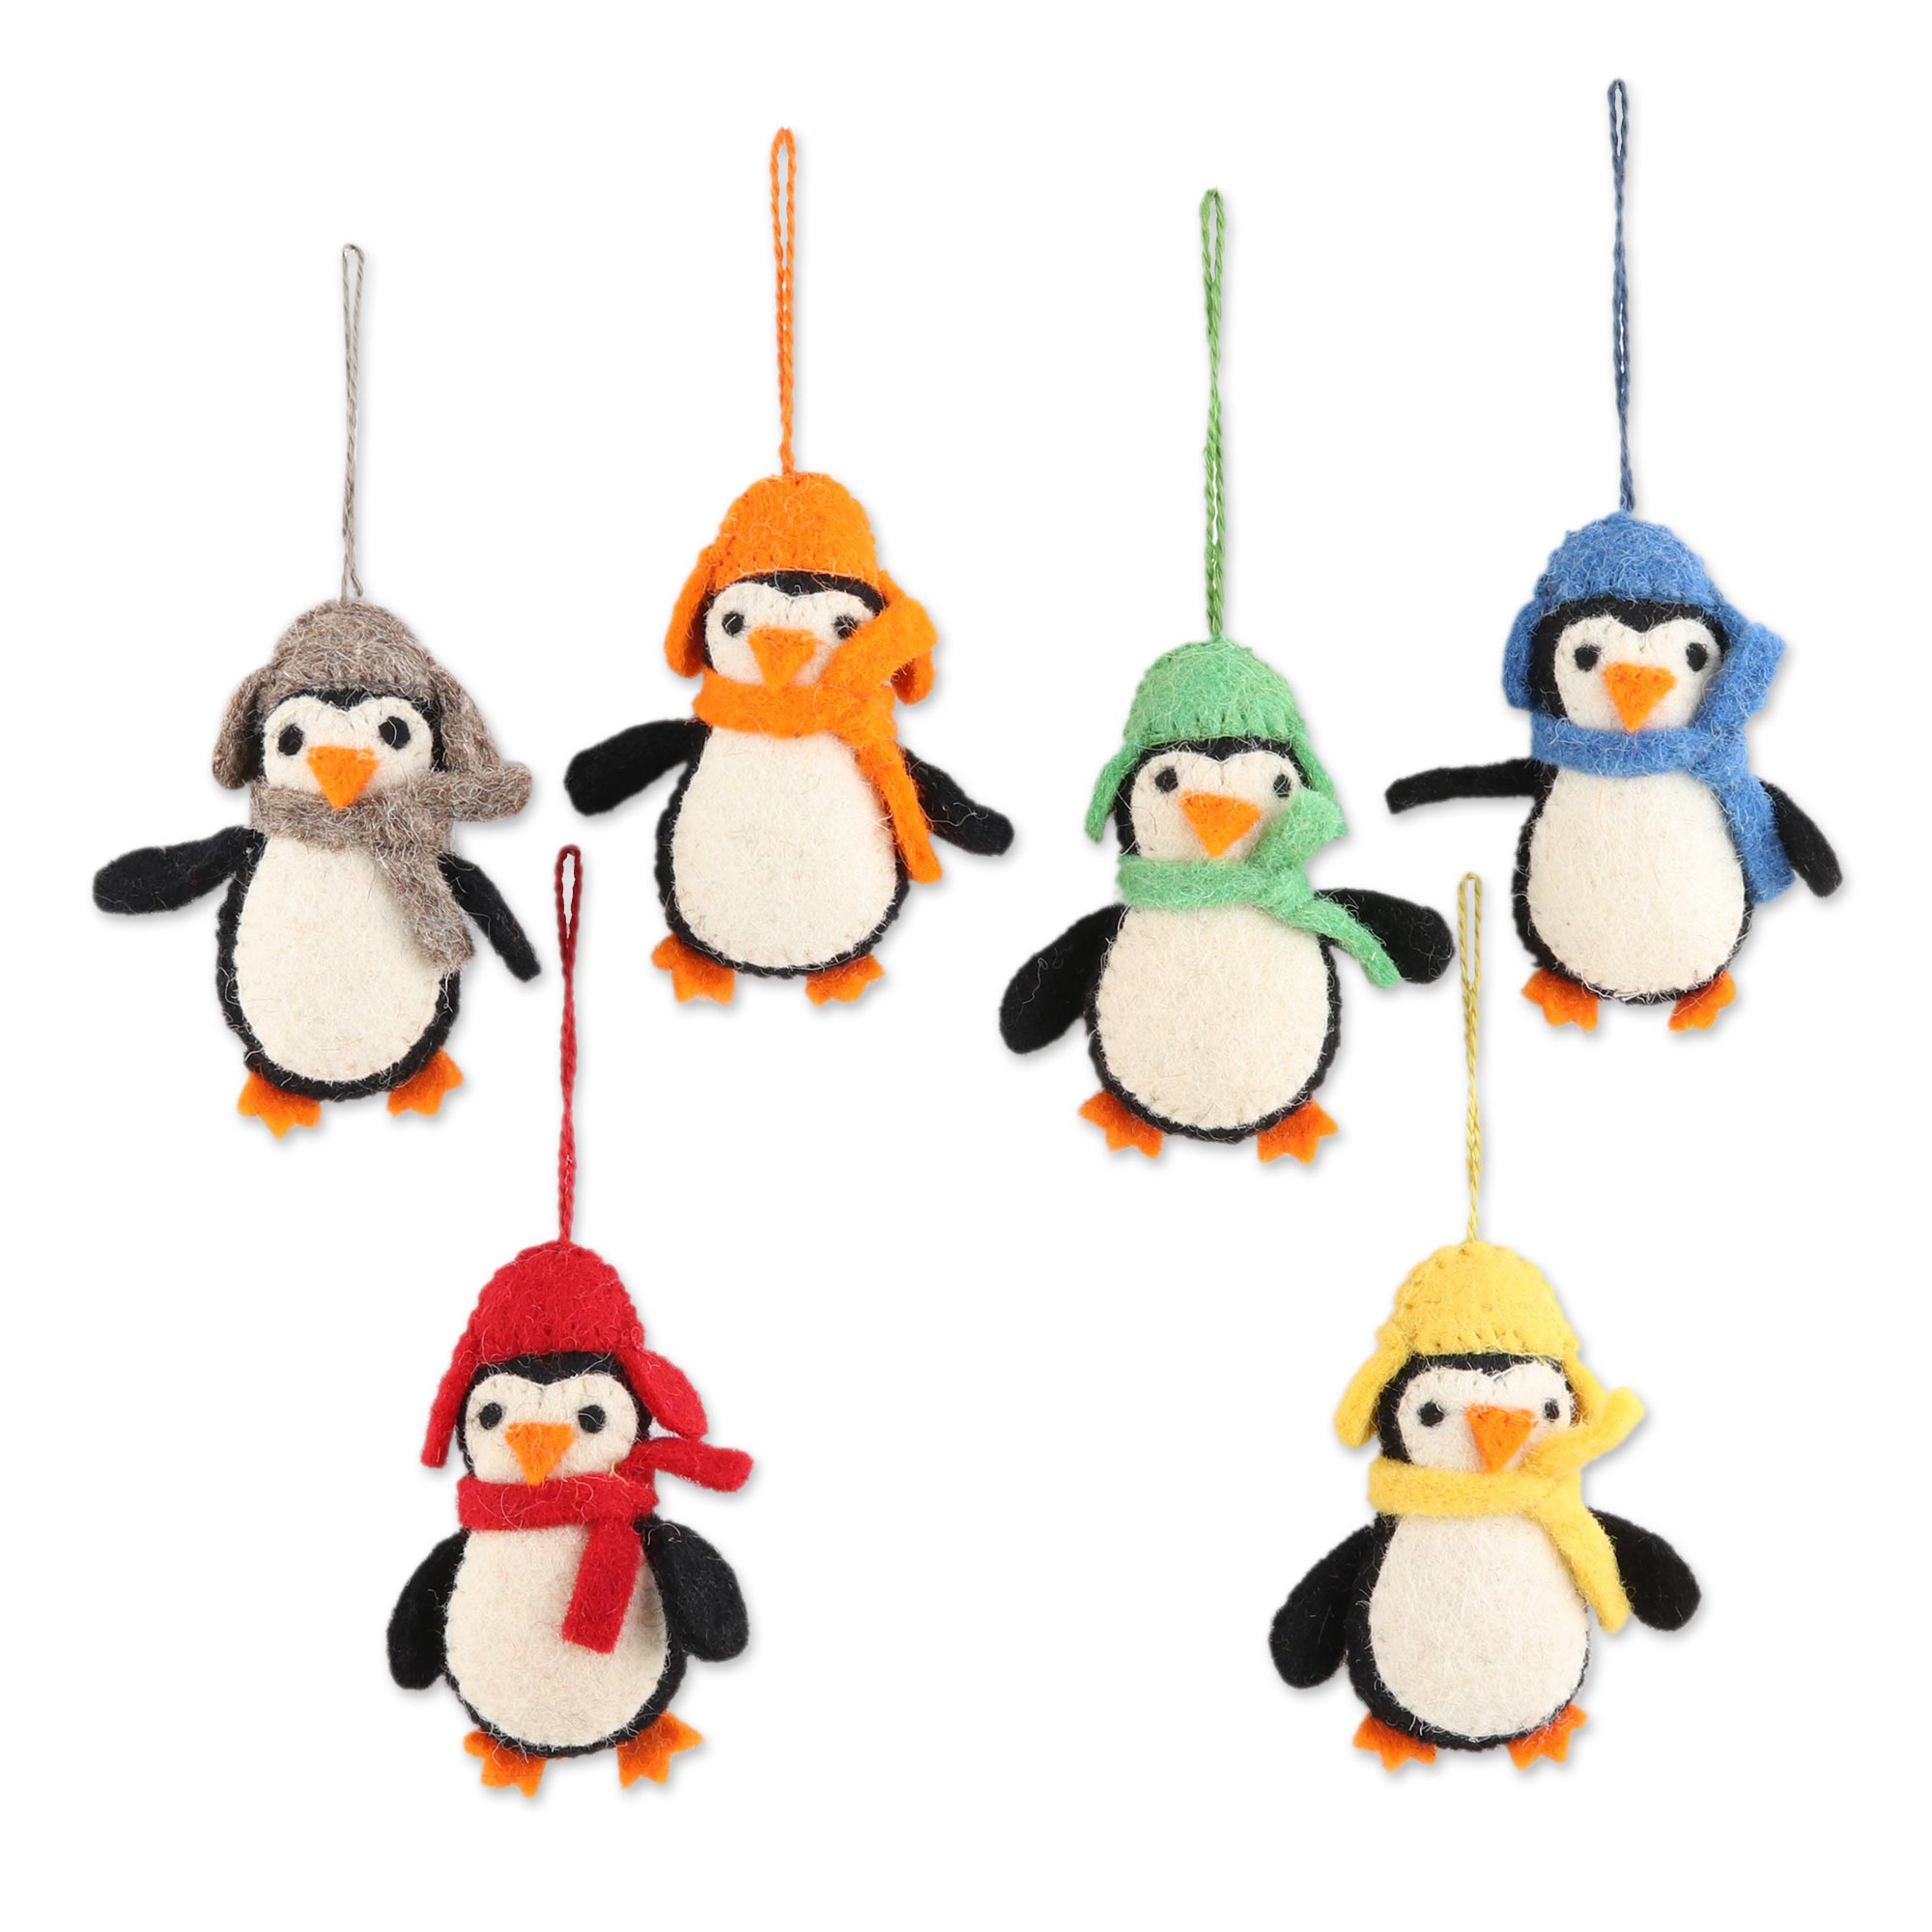 Handmade Felted Wool Penguin ornaments (Set of 6) - Cozy Penguins